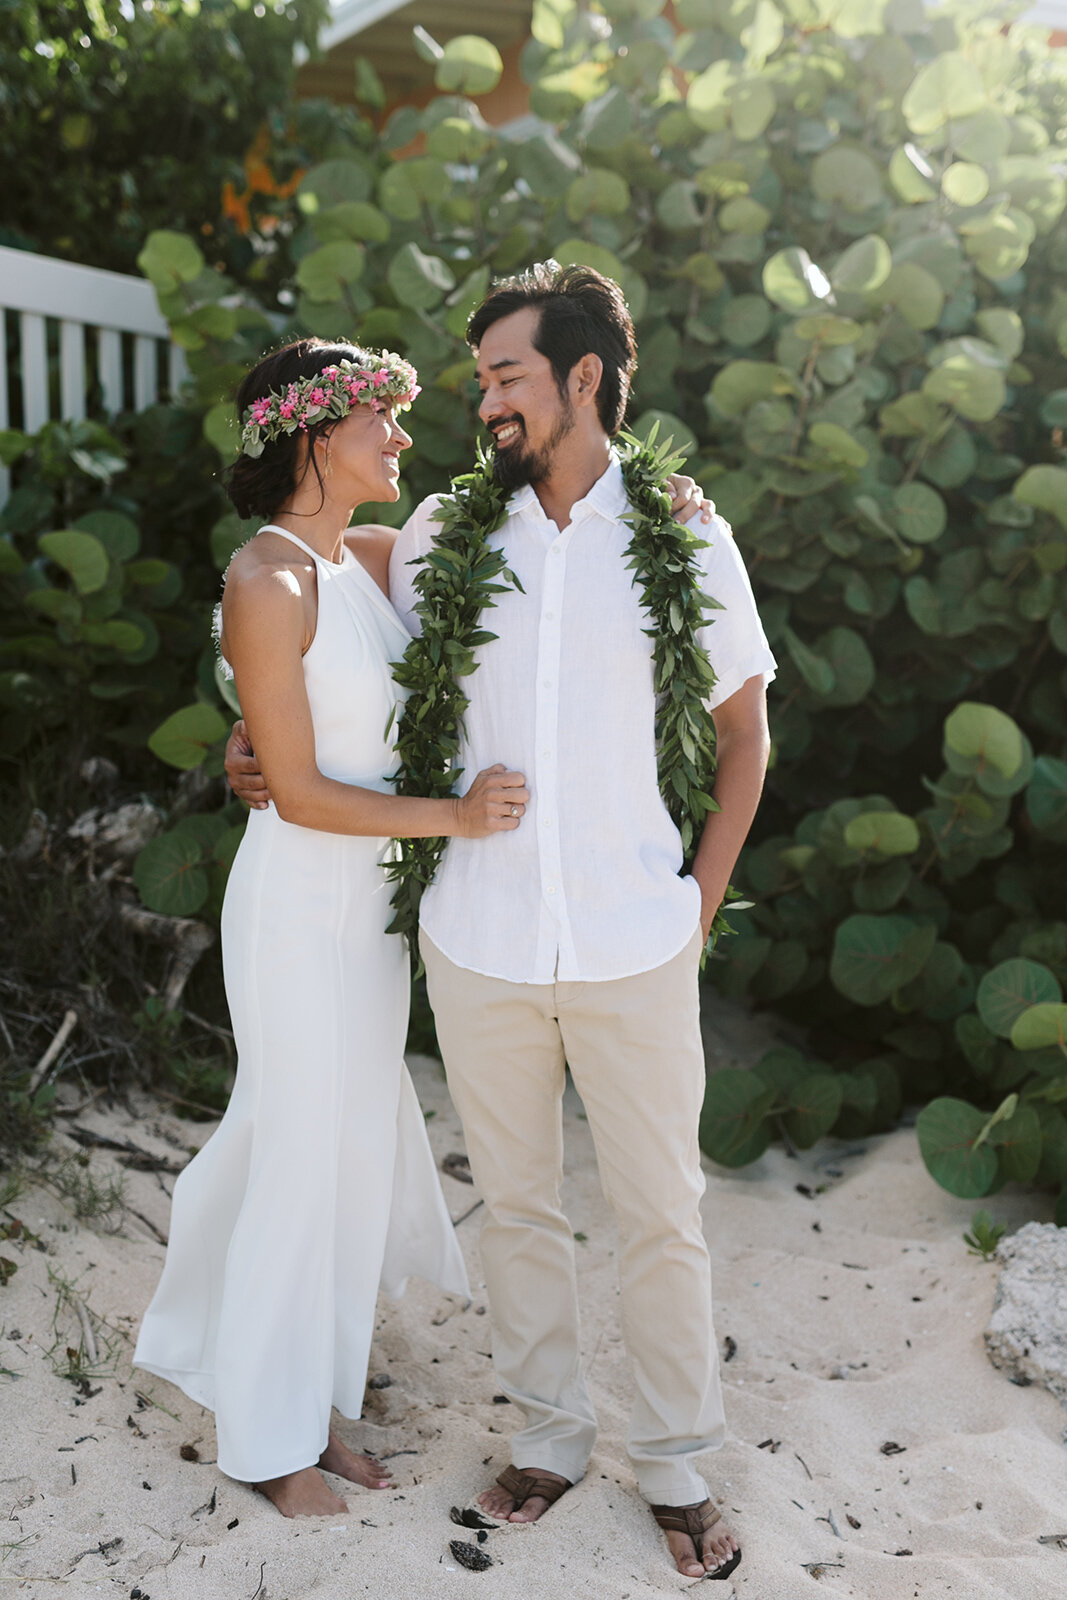 Mokuleia-North-Shore-Hawaii-Beach-House-Wedding-bride-groom-portraits